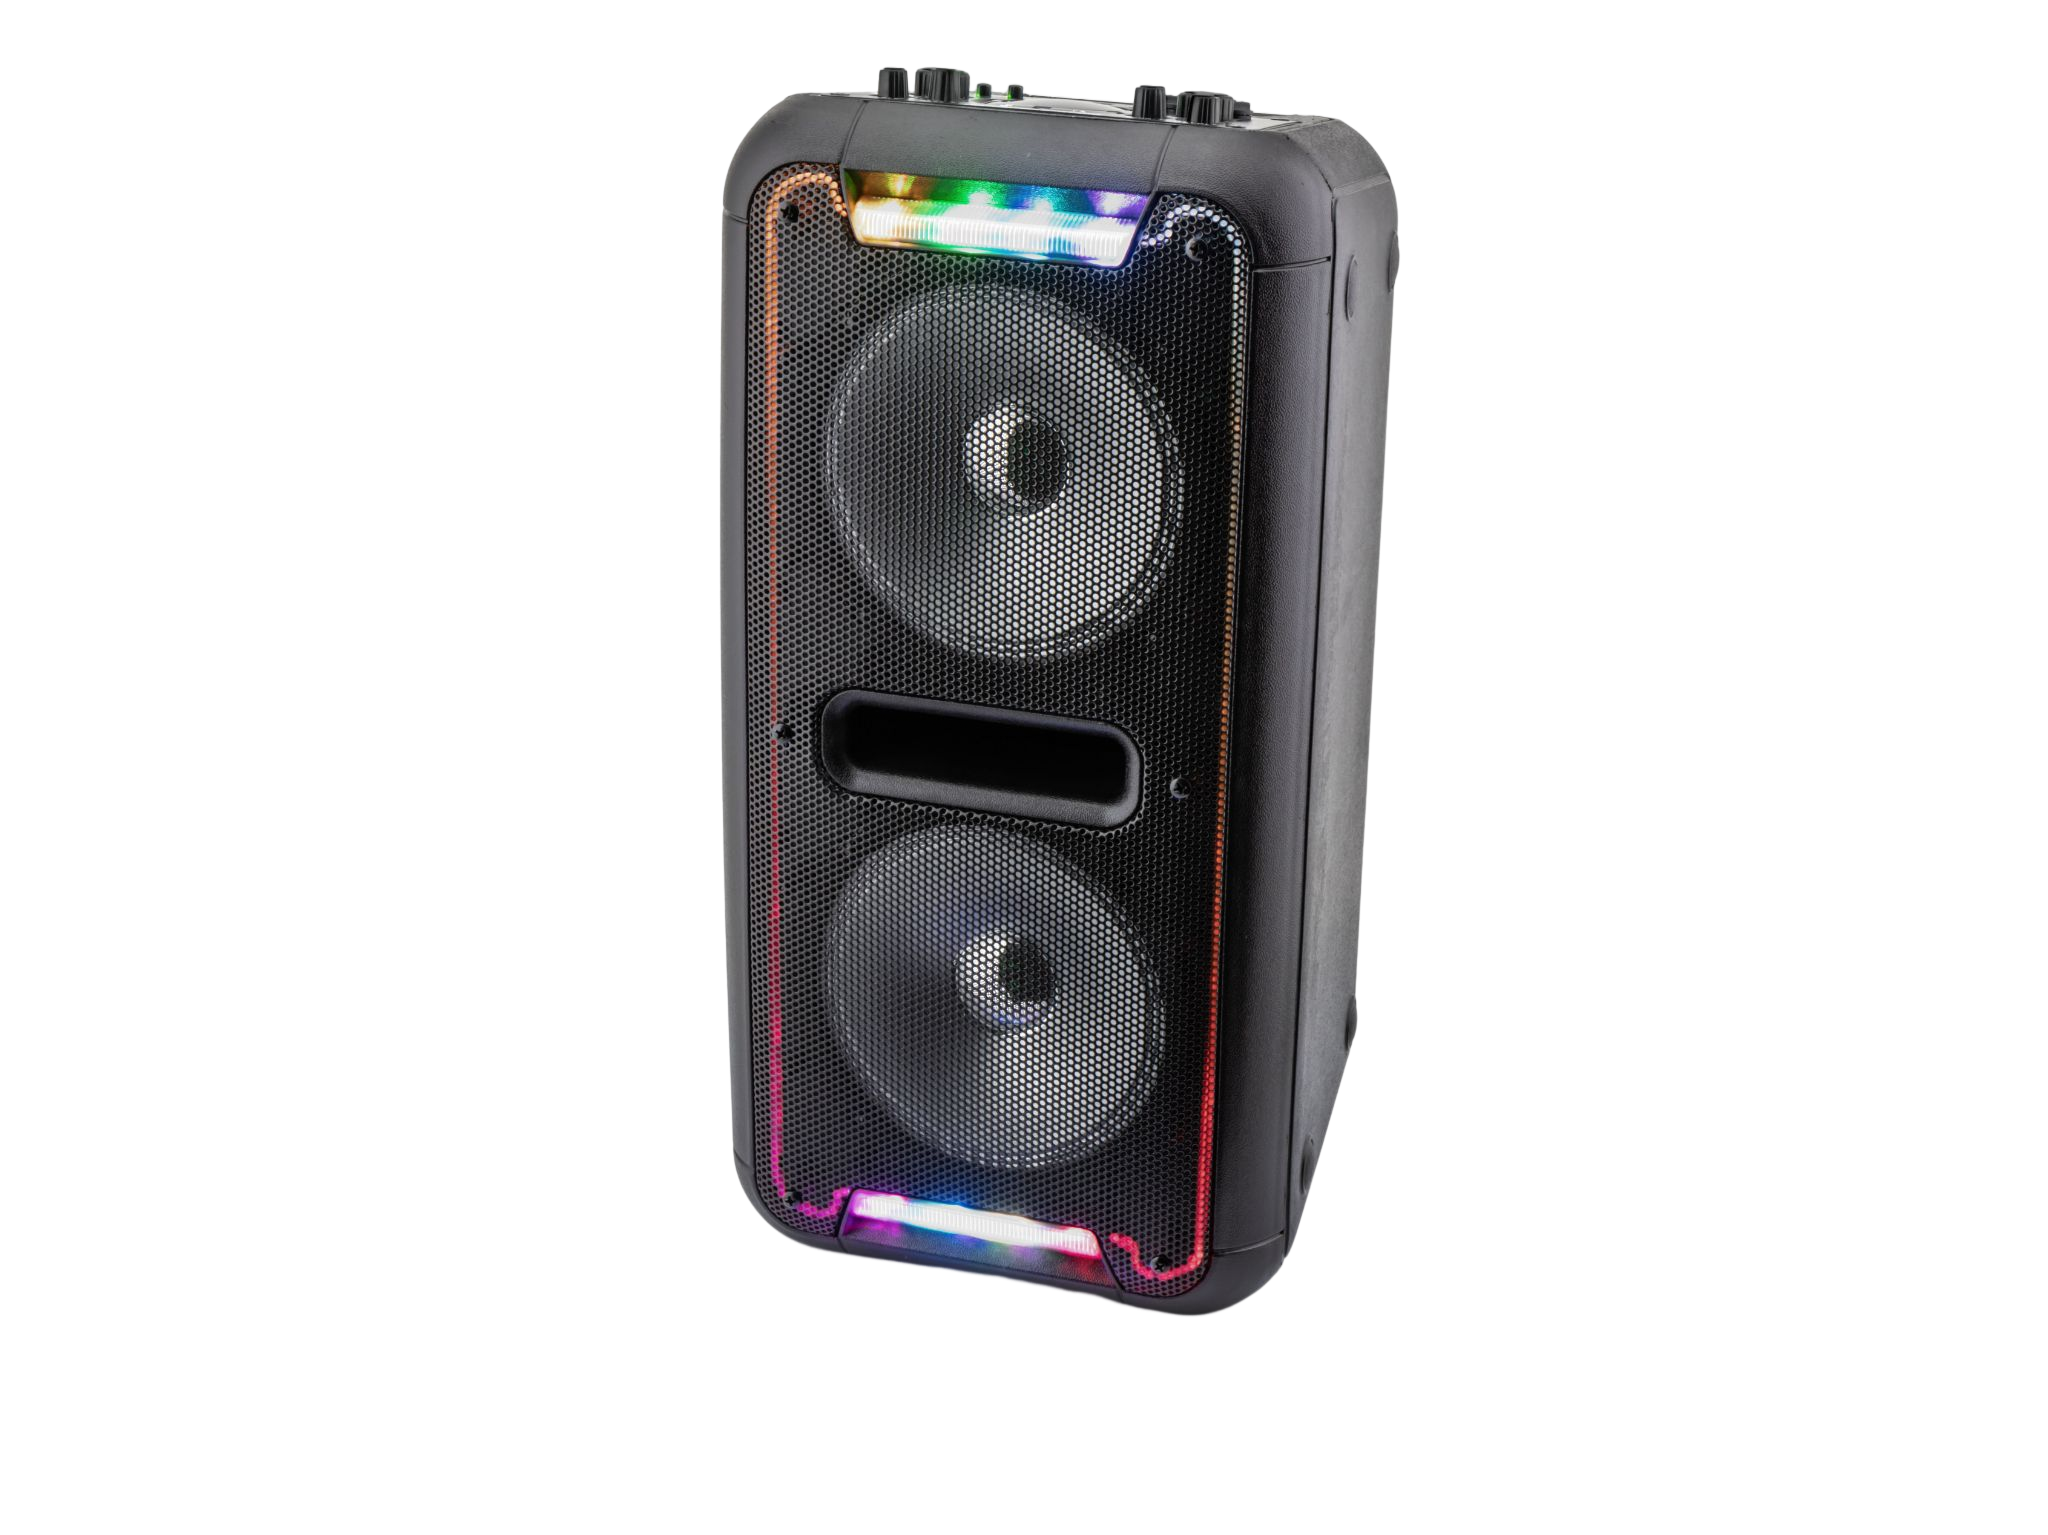 Calibre Hpa502btl Altavoz bluetooth portatil lamparas led multicolores bateria incorporada opcion de karaoke para cantar high power altavoces